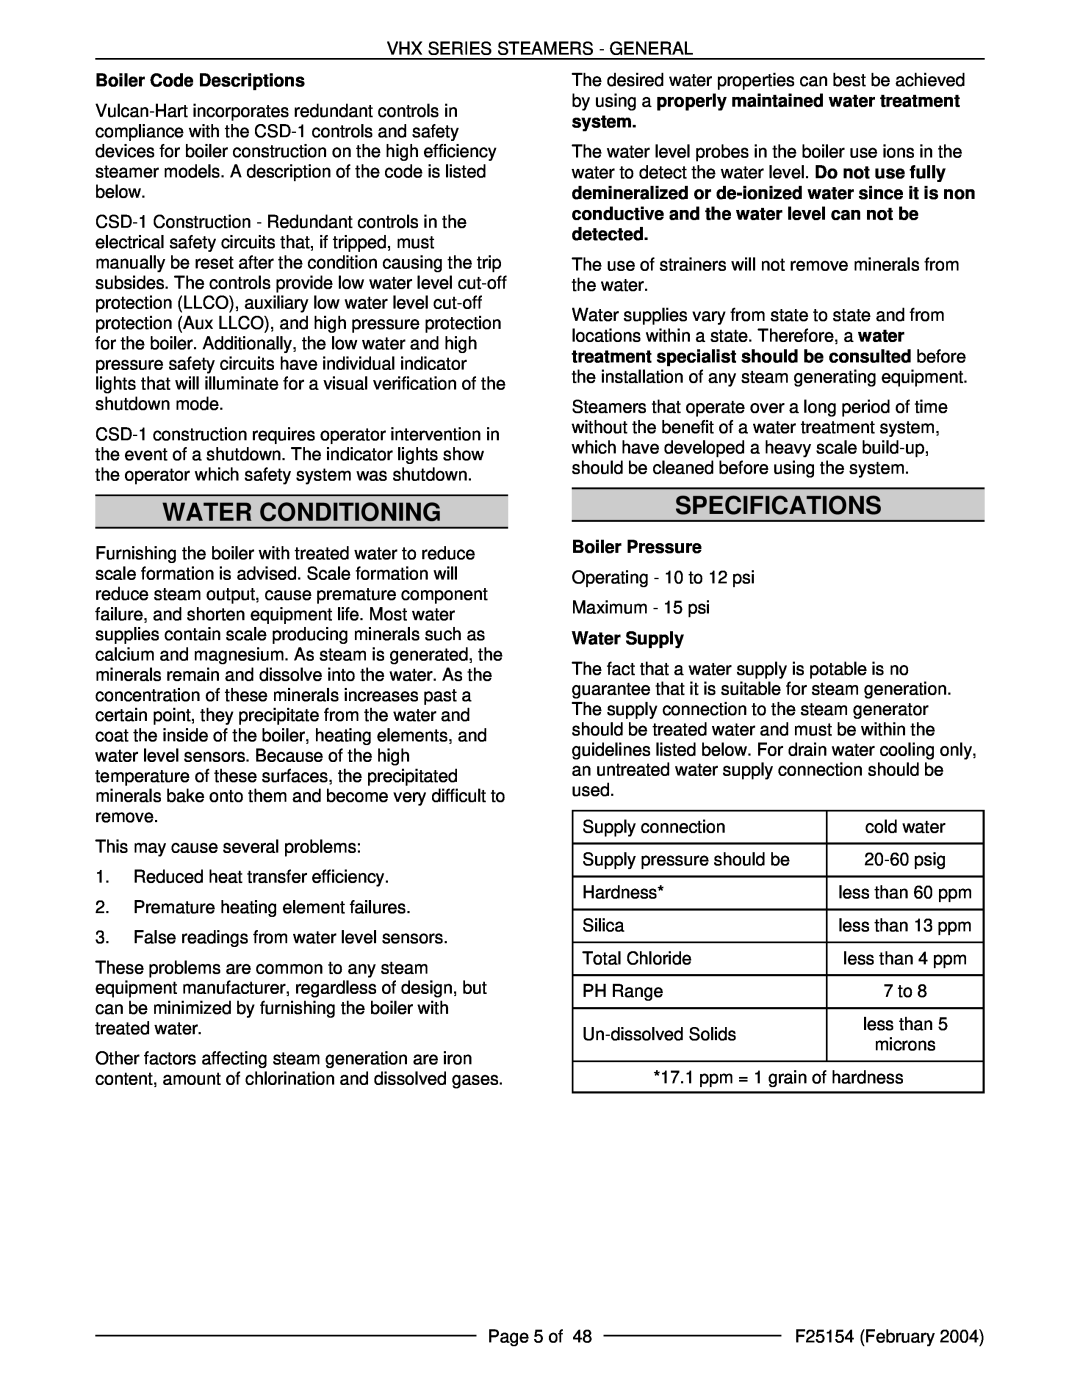 Vulcan-Hart ML-126857, VHX24E5 Water Conditioning, Specifications, Boiler Code Descriptions, Boiler Pressure, Water Supply 